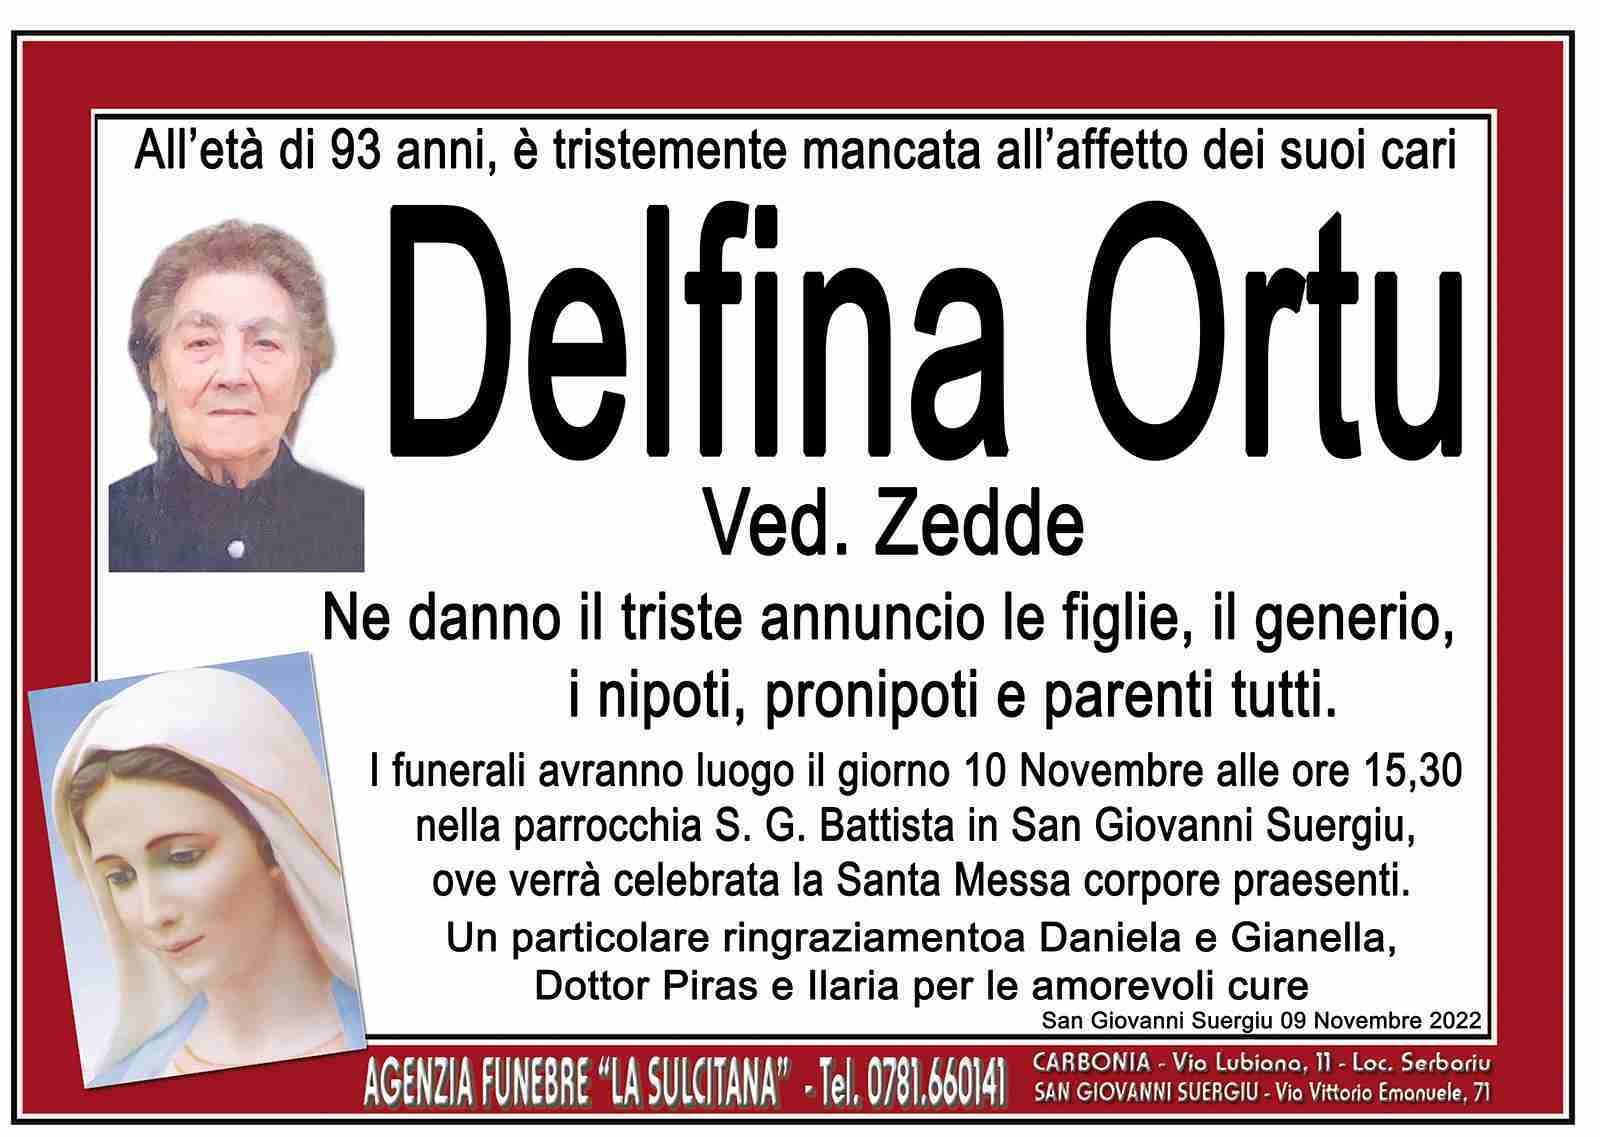 Delfina Ortu